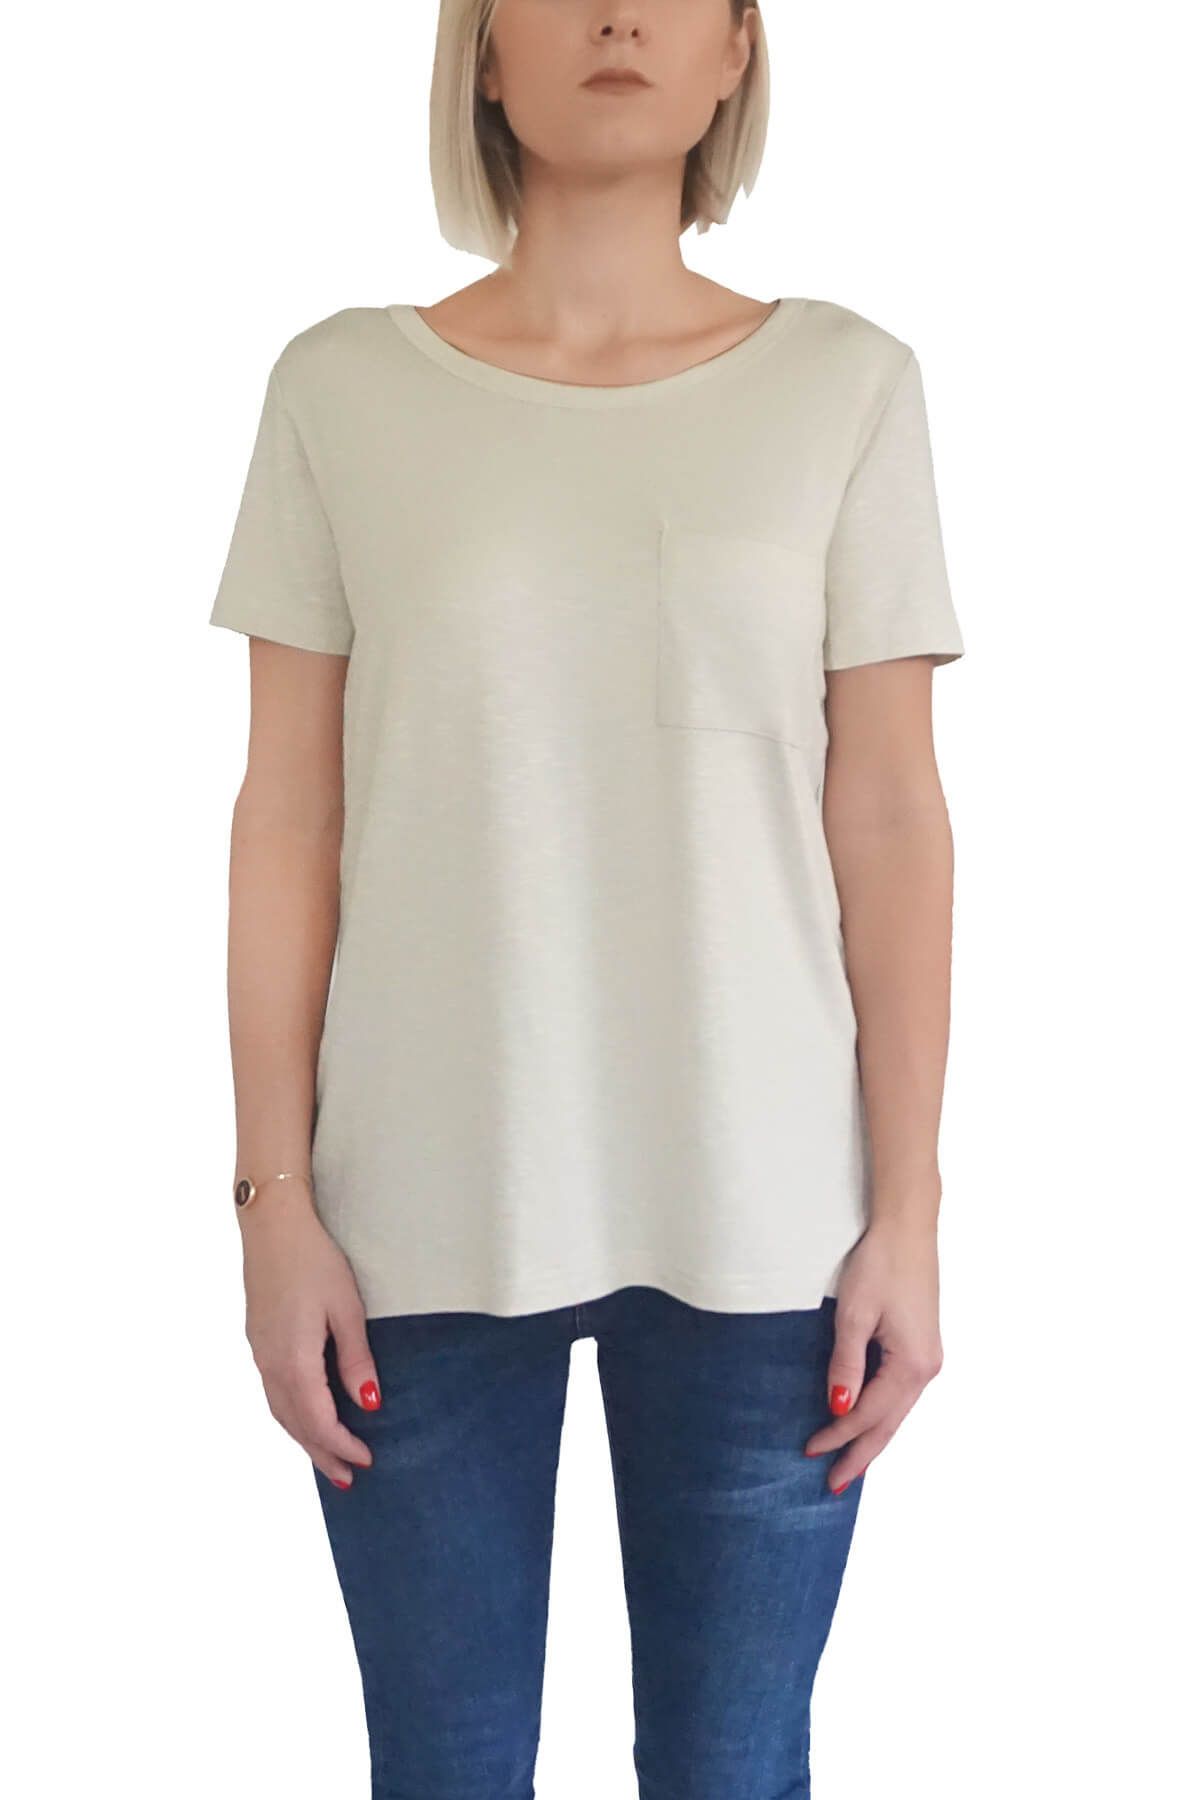 Mof Basics Kadın Taş T-Shirt SYCT-T